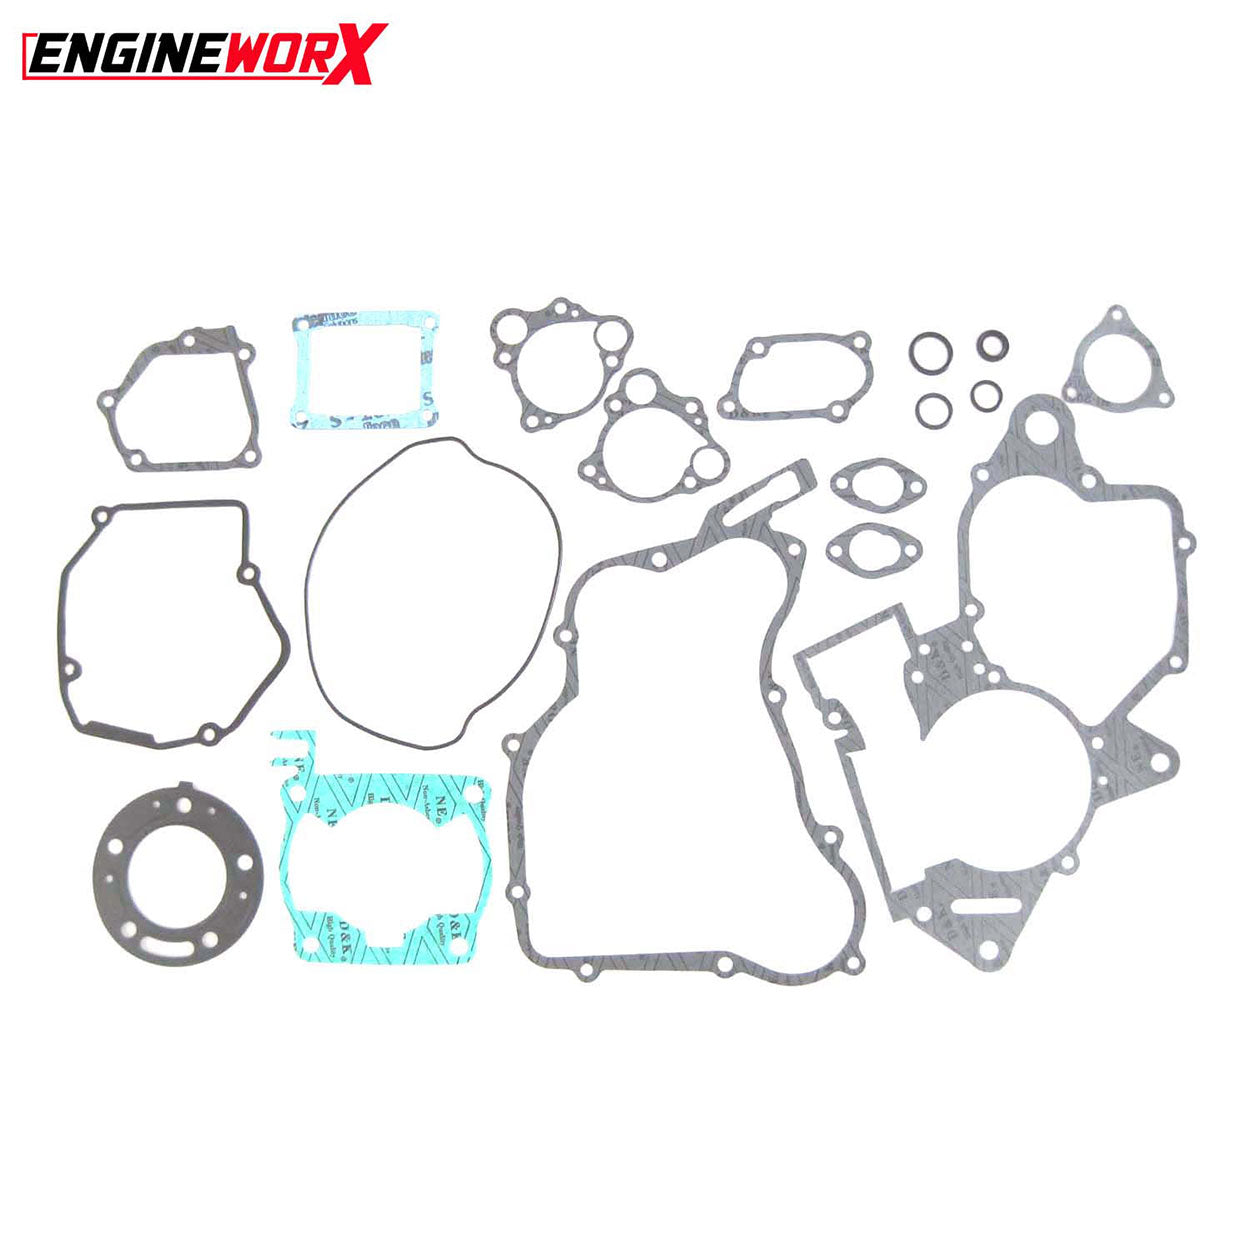 Engineworx Full Gasket Kit Honda CR 125 98-99